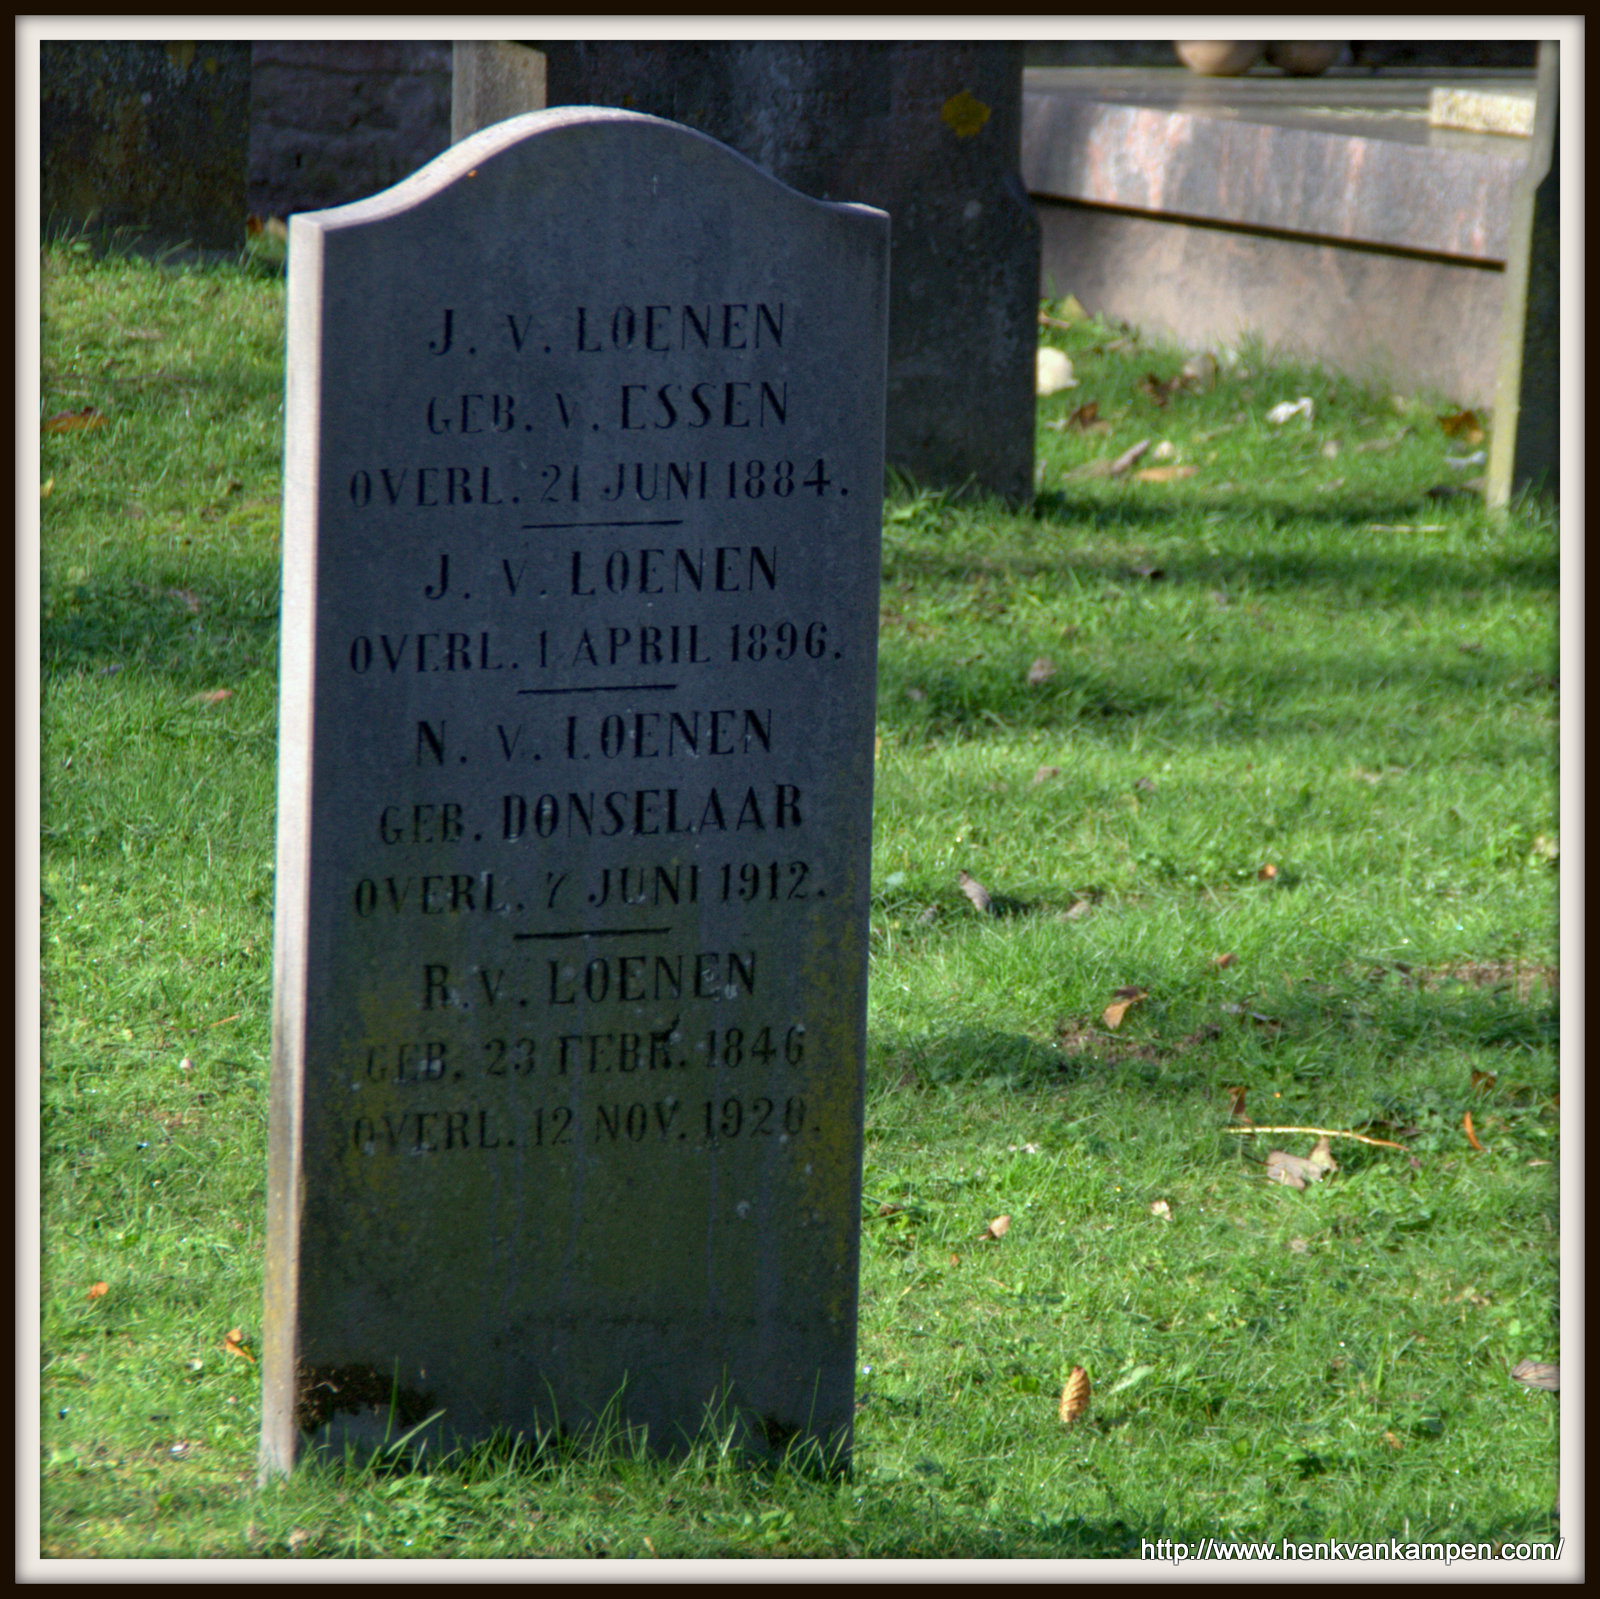 Tombstone Tuesday: Van Loenen family grave